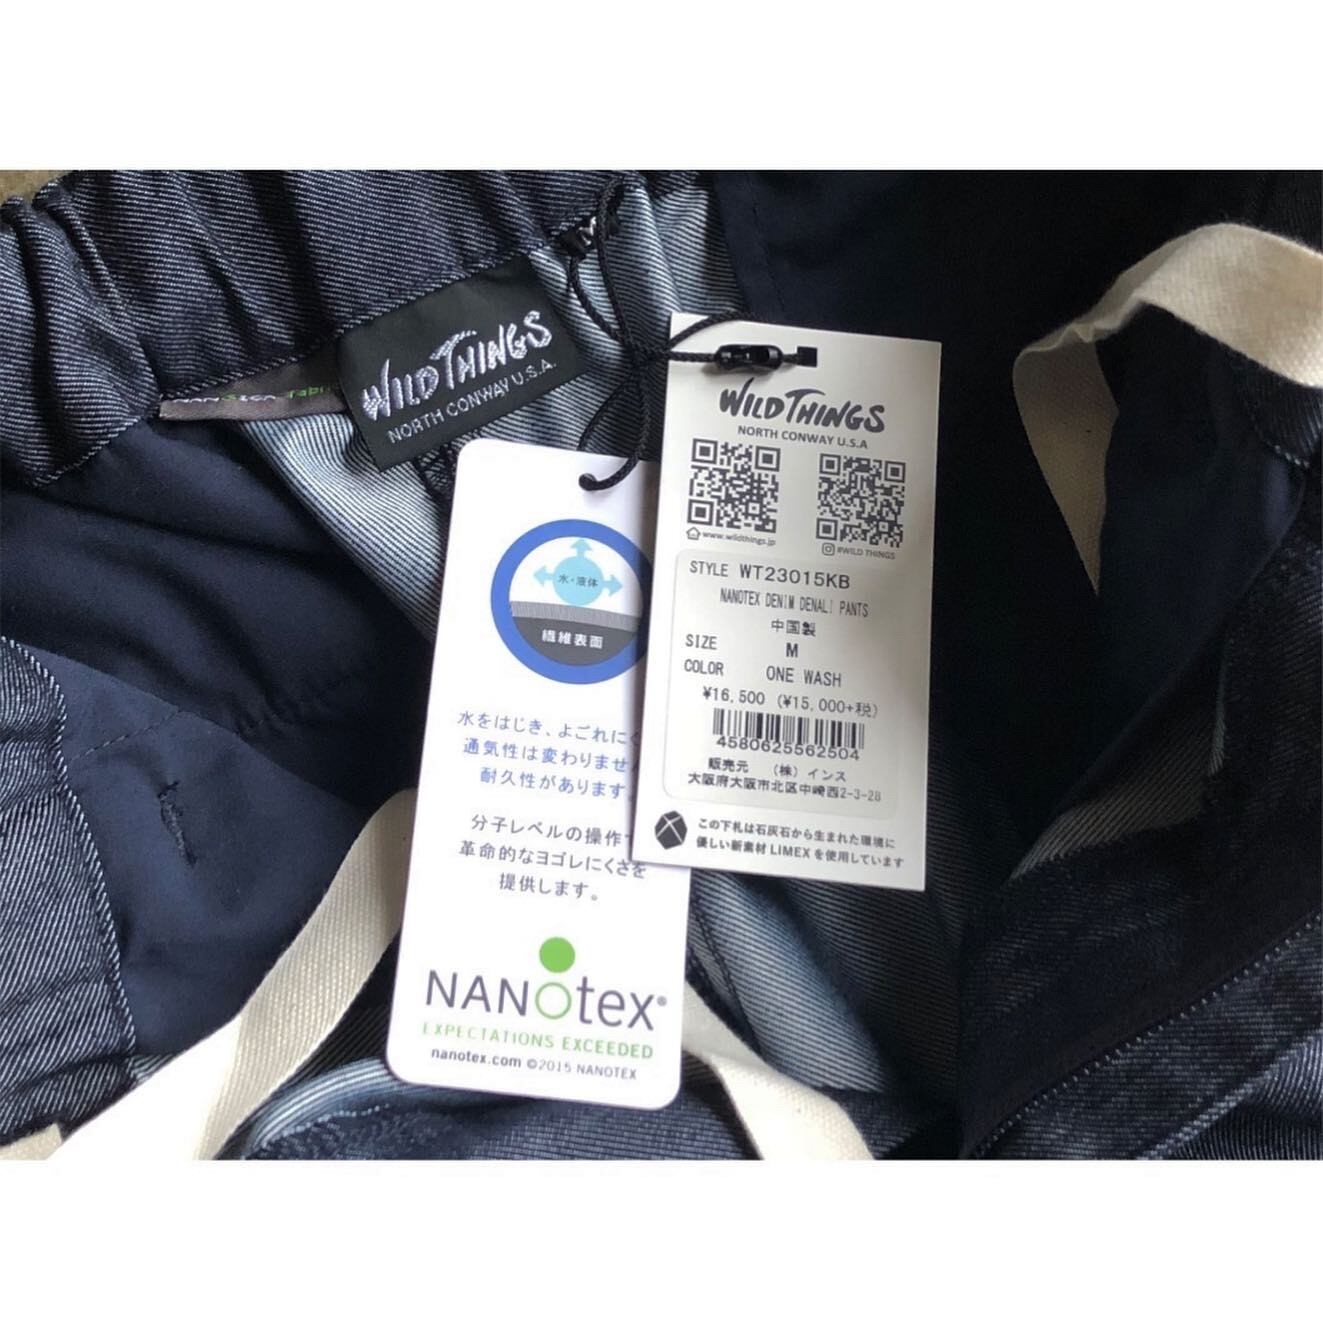 WILD THINGS (ワイルドシングス) Nano Tex Denim DENALI Pants One Wash | AUTHENTIC  Life Store powered by BASE